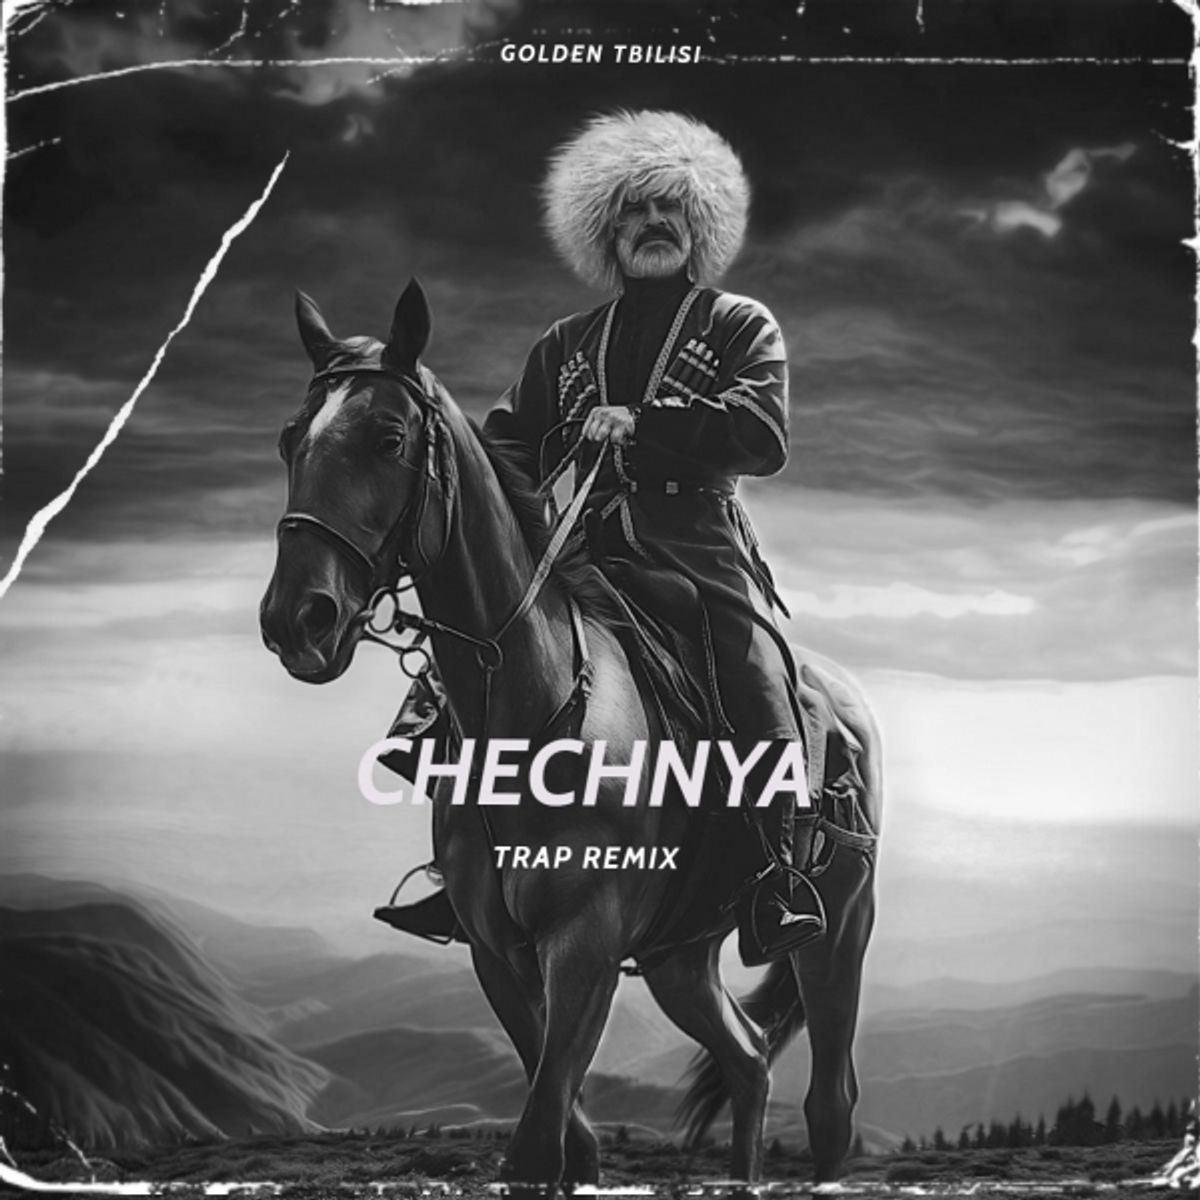 Chechnya Trap Remix. Golden Tbilisi texili Trap Remix. Лезгинка ремикс. Чечня трап ремикс.